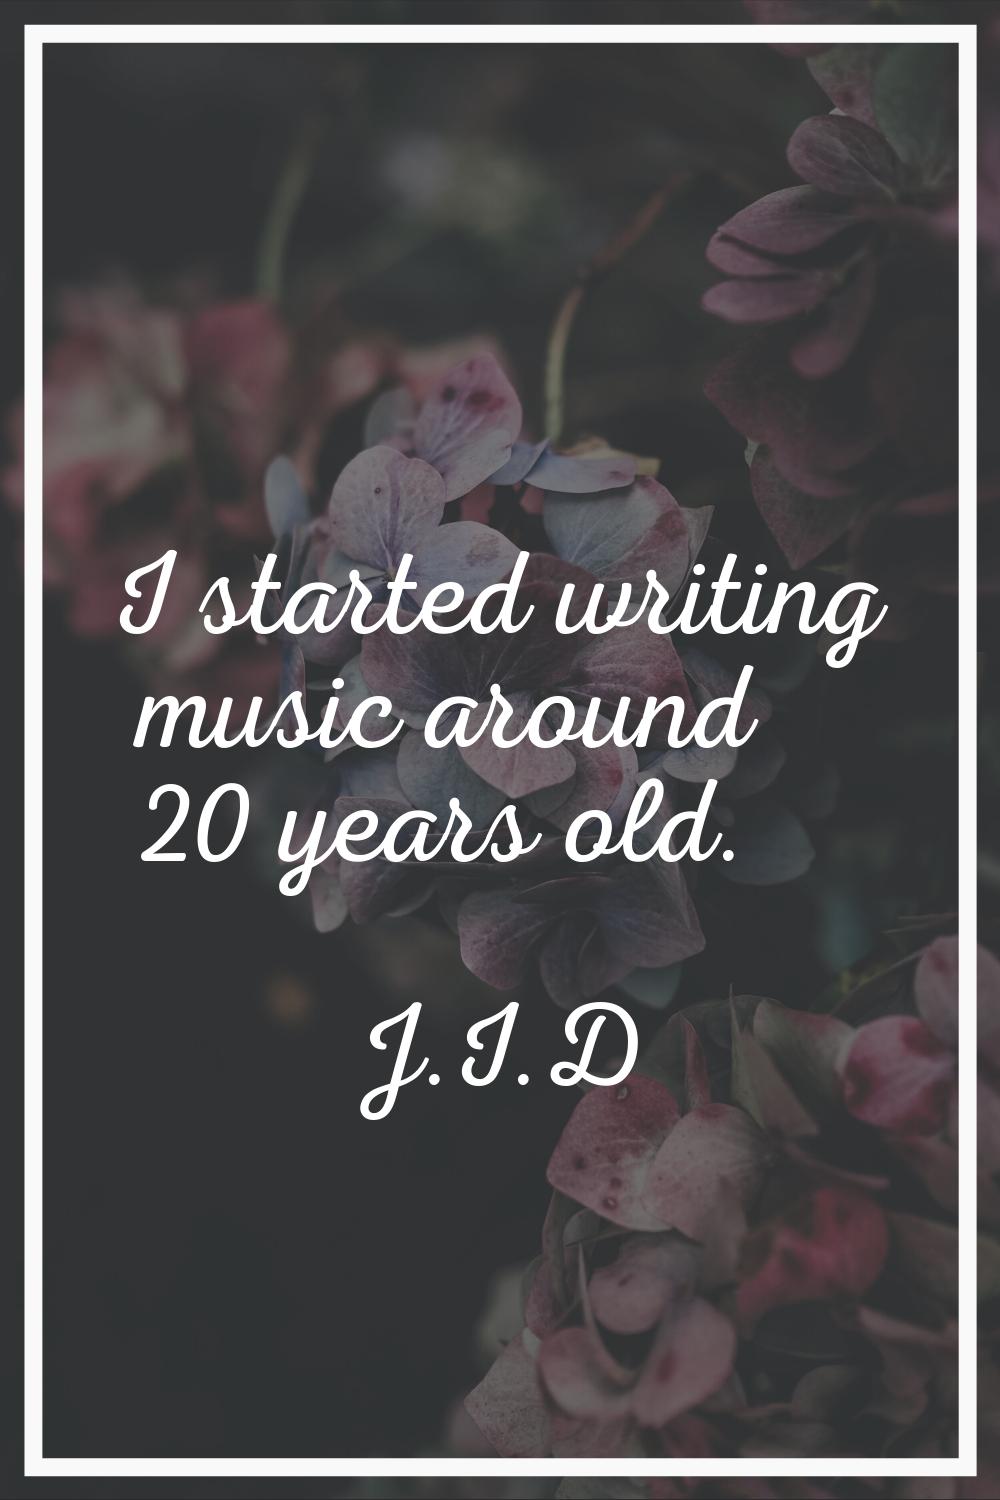 I started writing music around 20 years old.